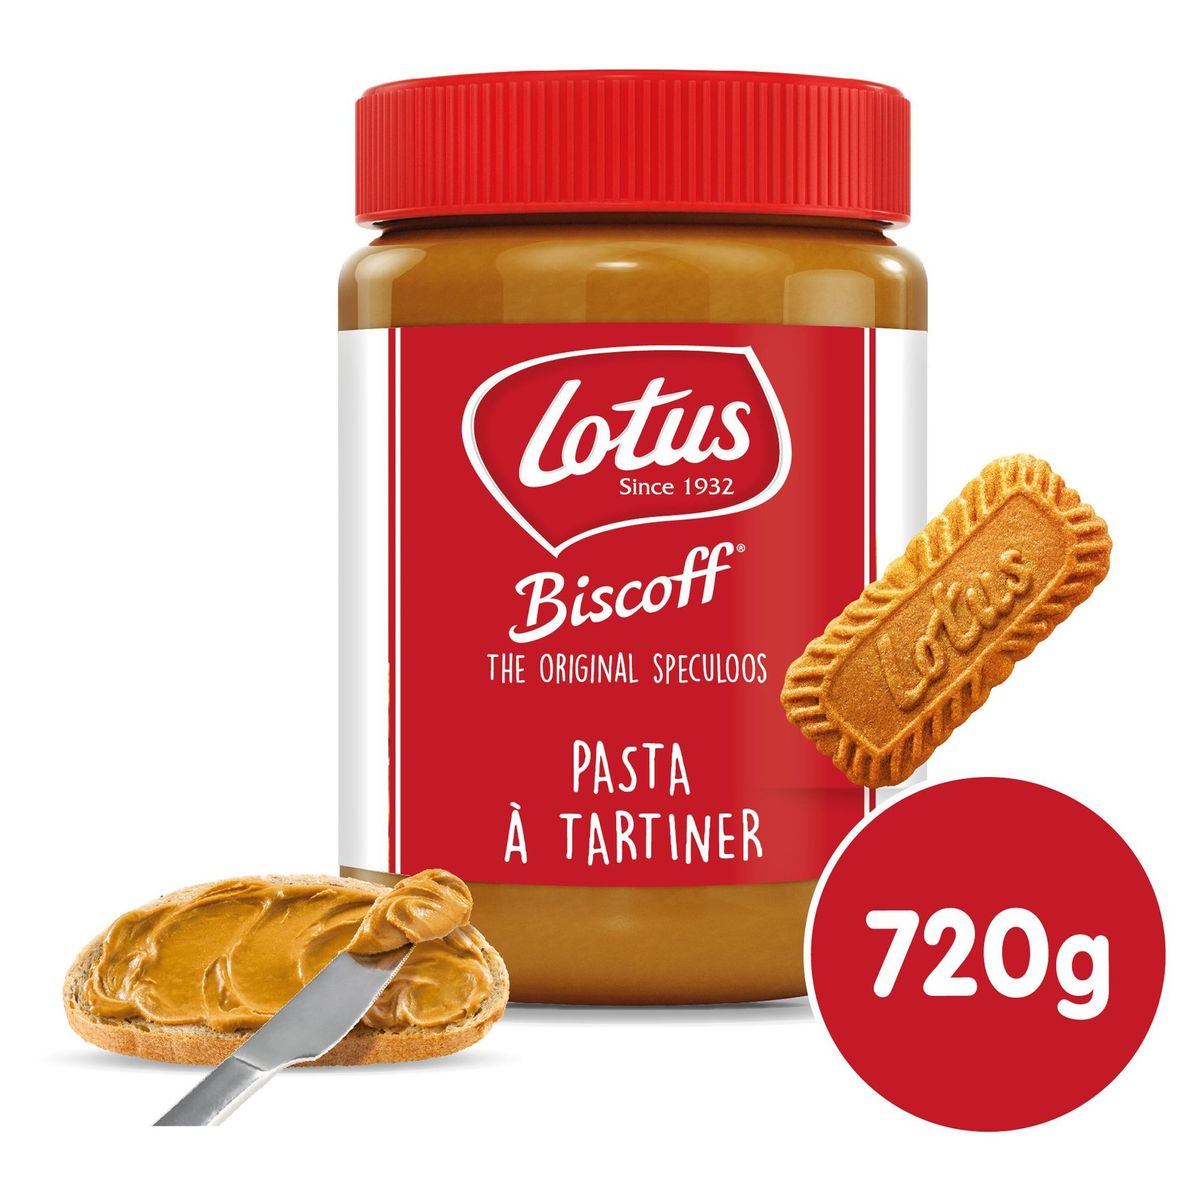 Lotus Biscoff Pâte à tartiner Speculoos 720 g